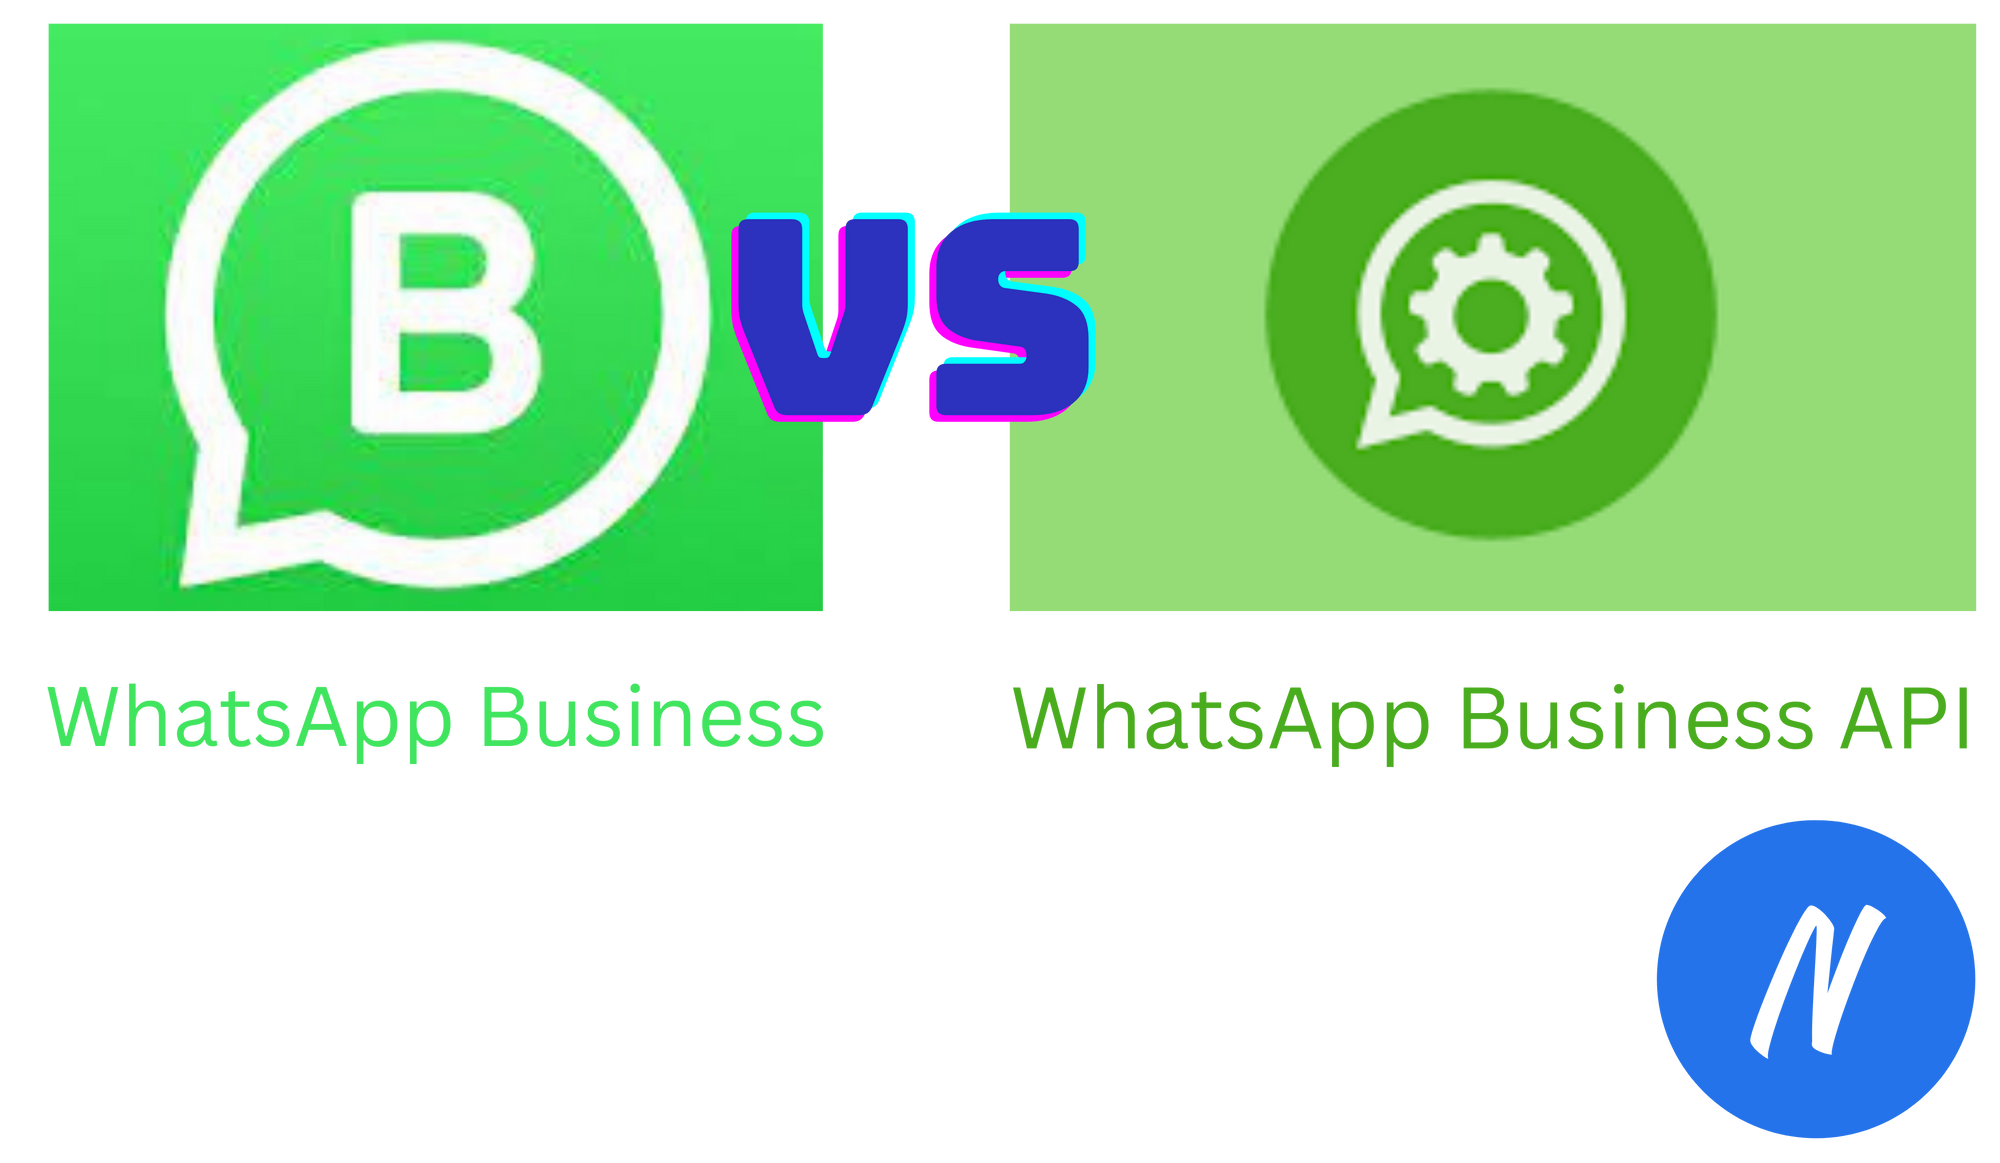 WhatsApp Business app vs API